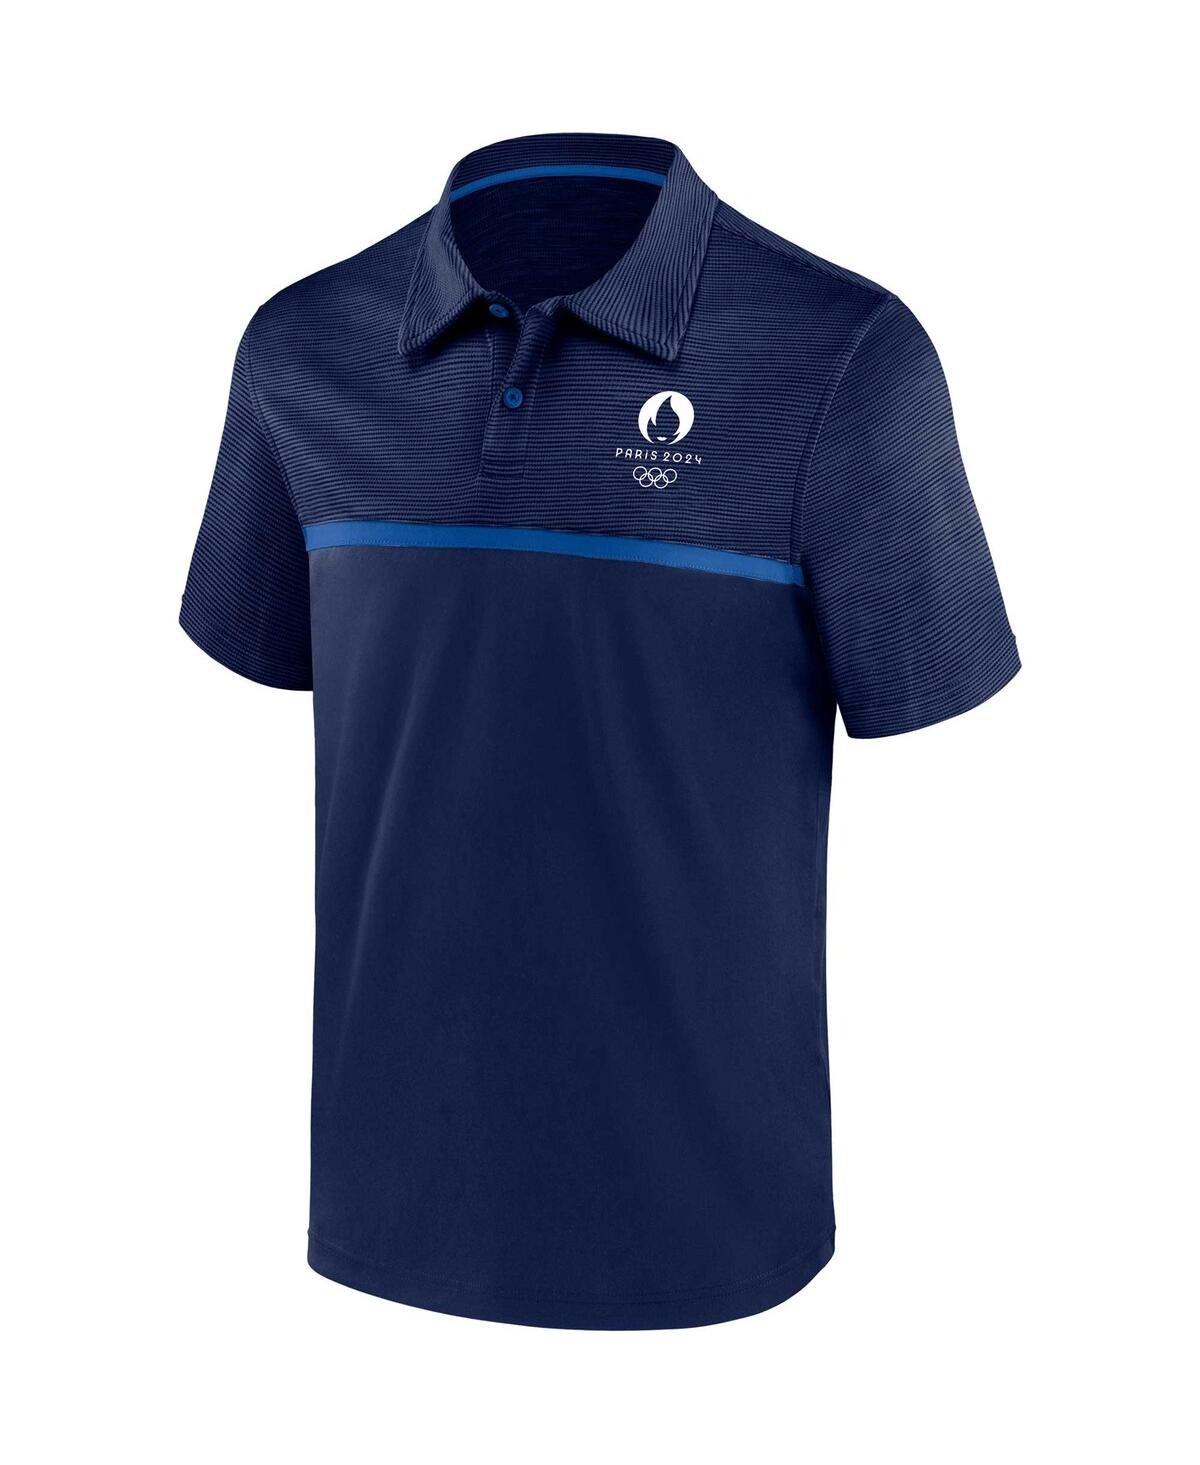 Shop Fanatics Branded Men's Navy Paris 2024 Summer Sport Polo